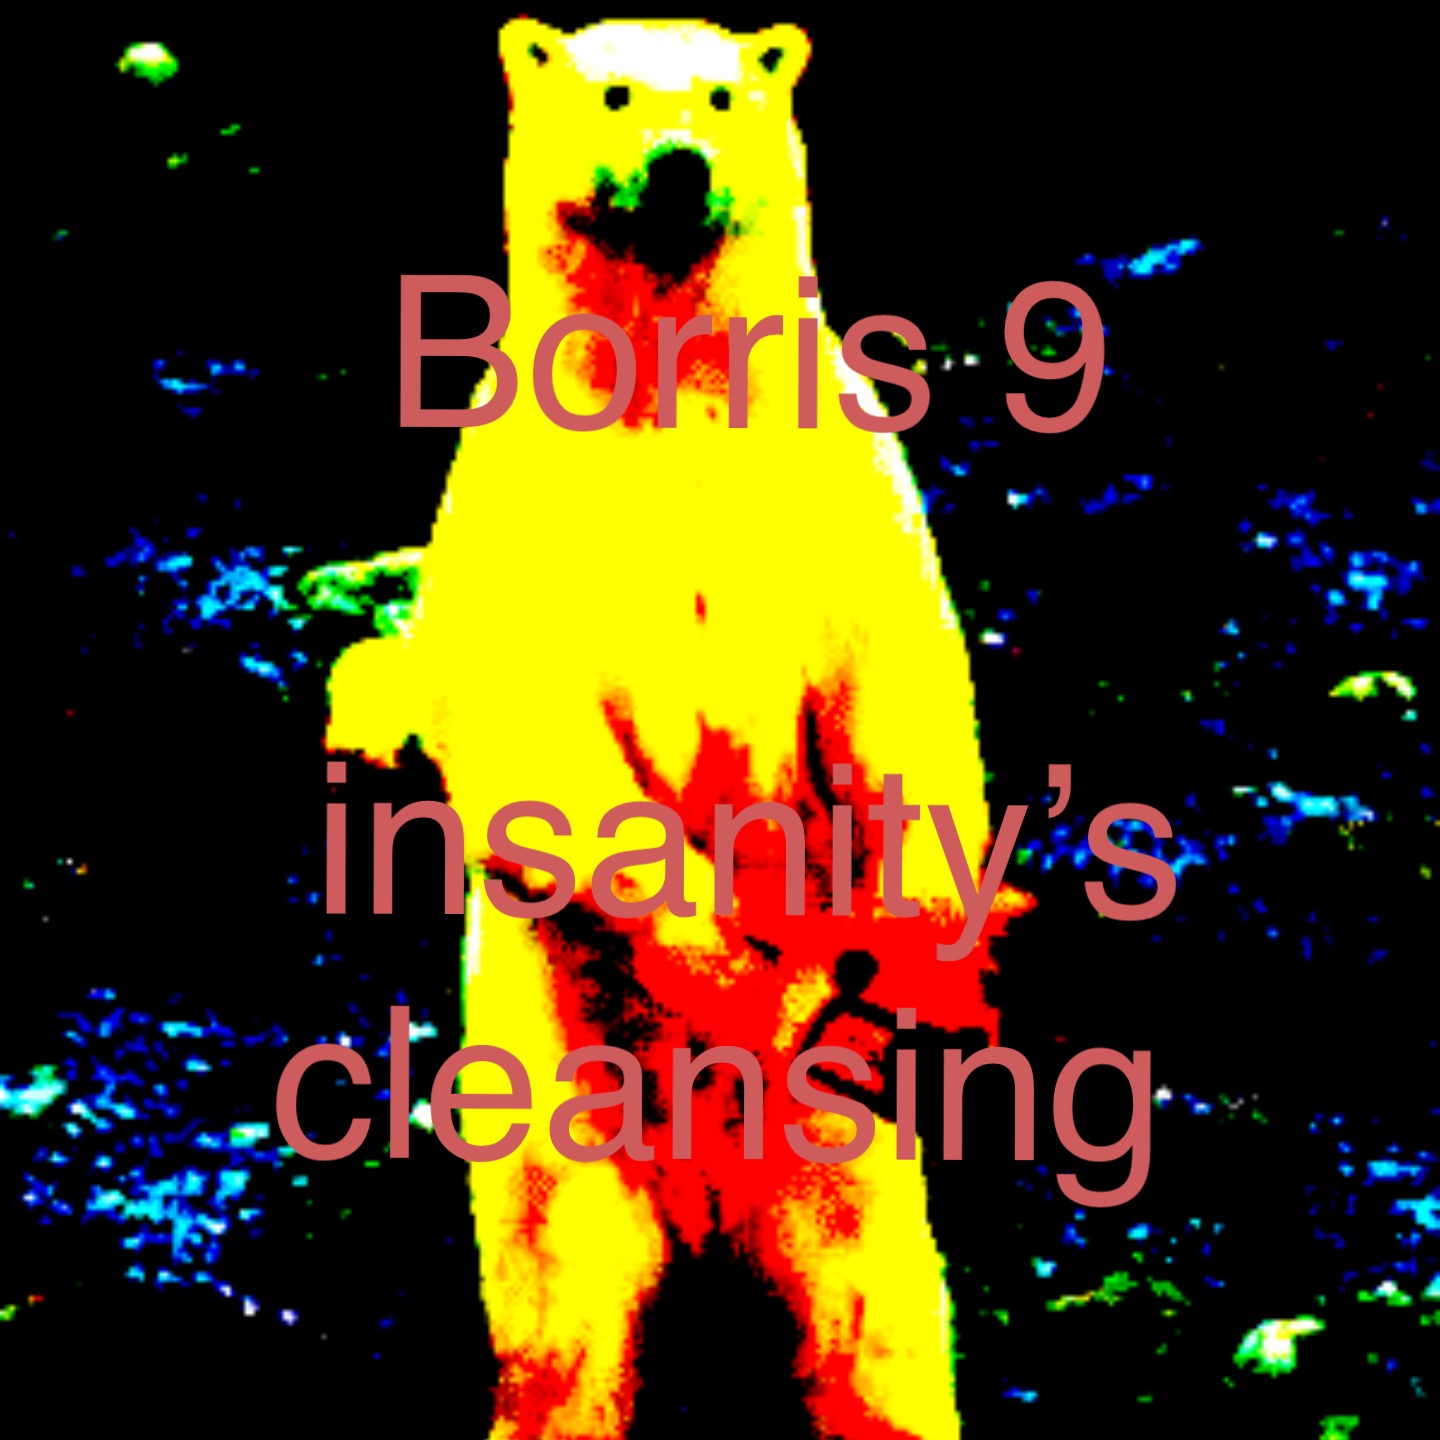 Borris 9 

Insanity’s cleansing